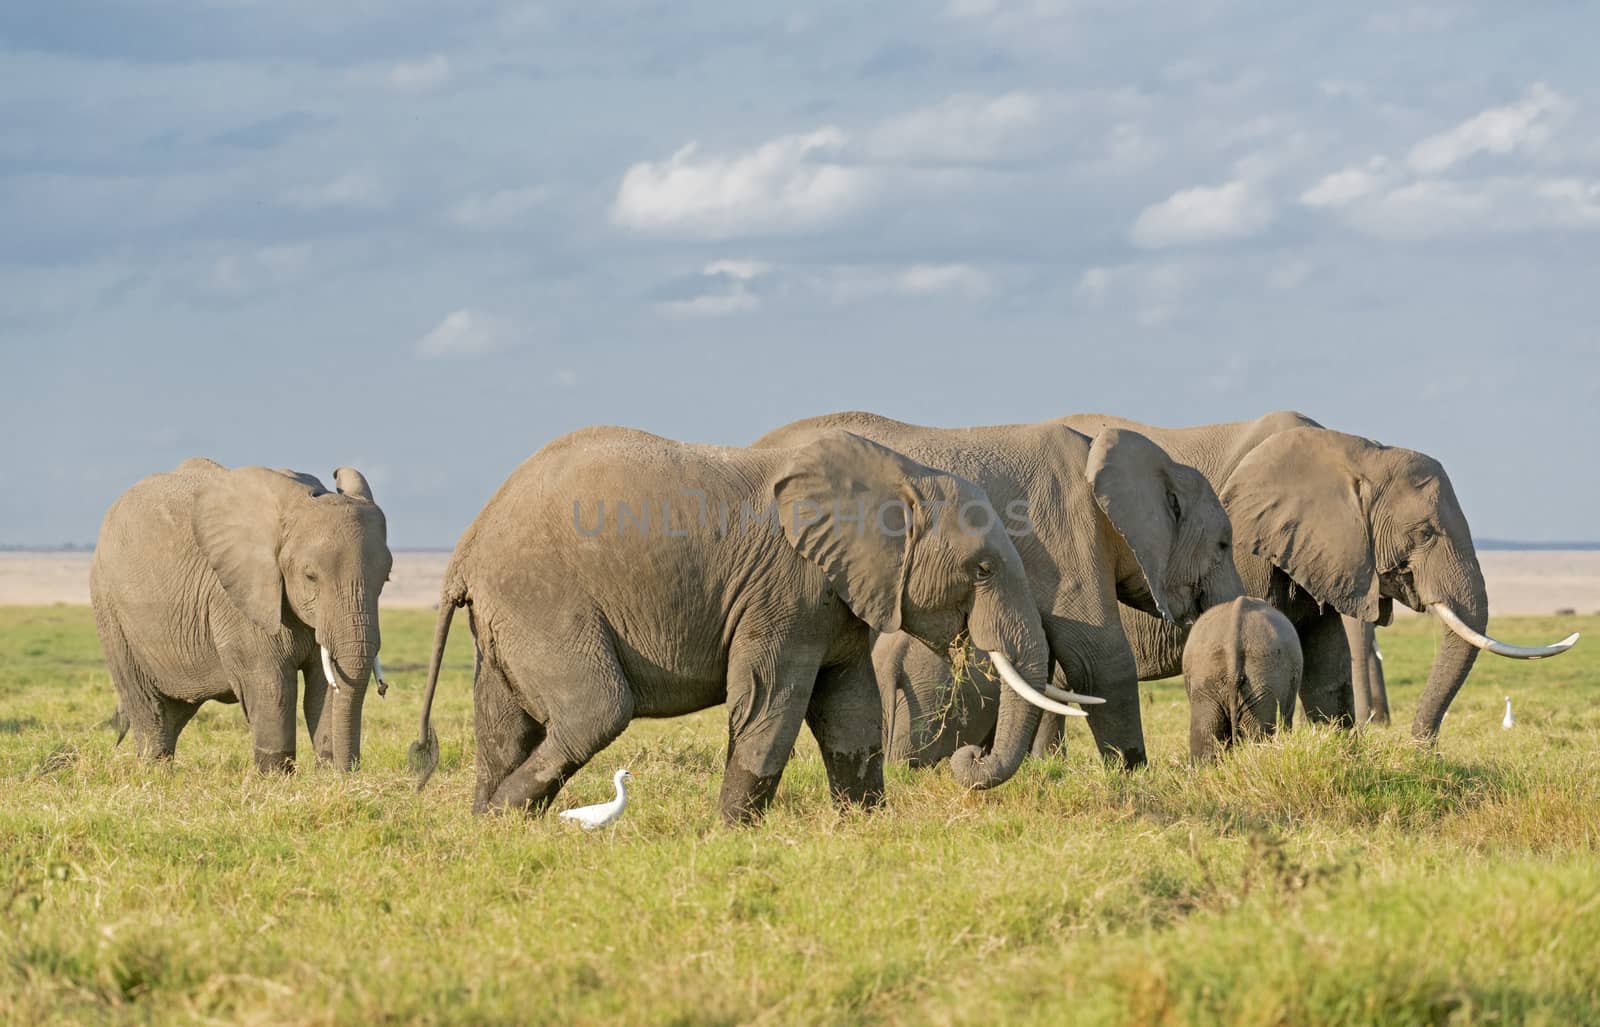 Elephants of Amboseli National Park by snafu